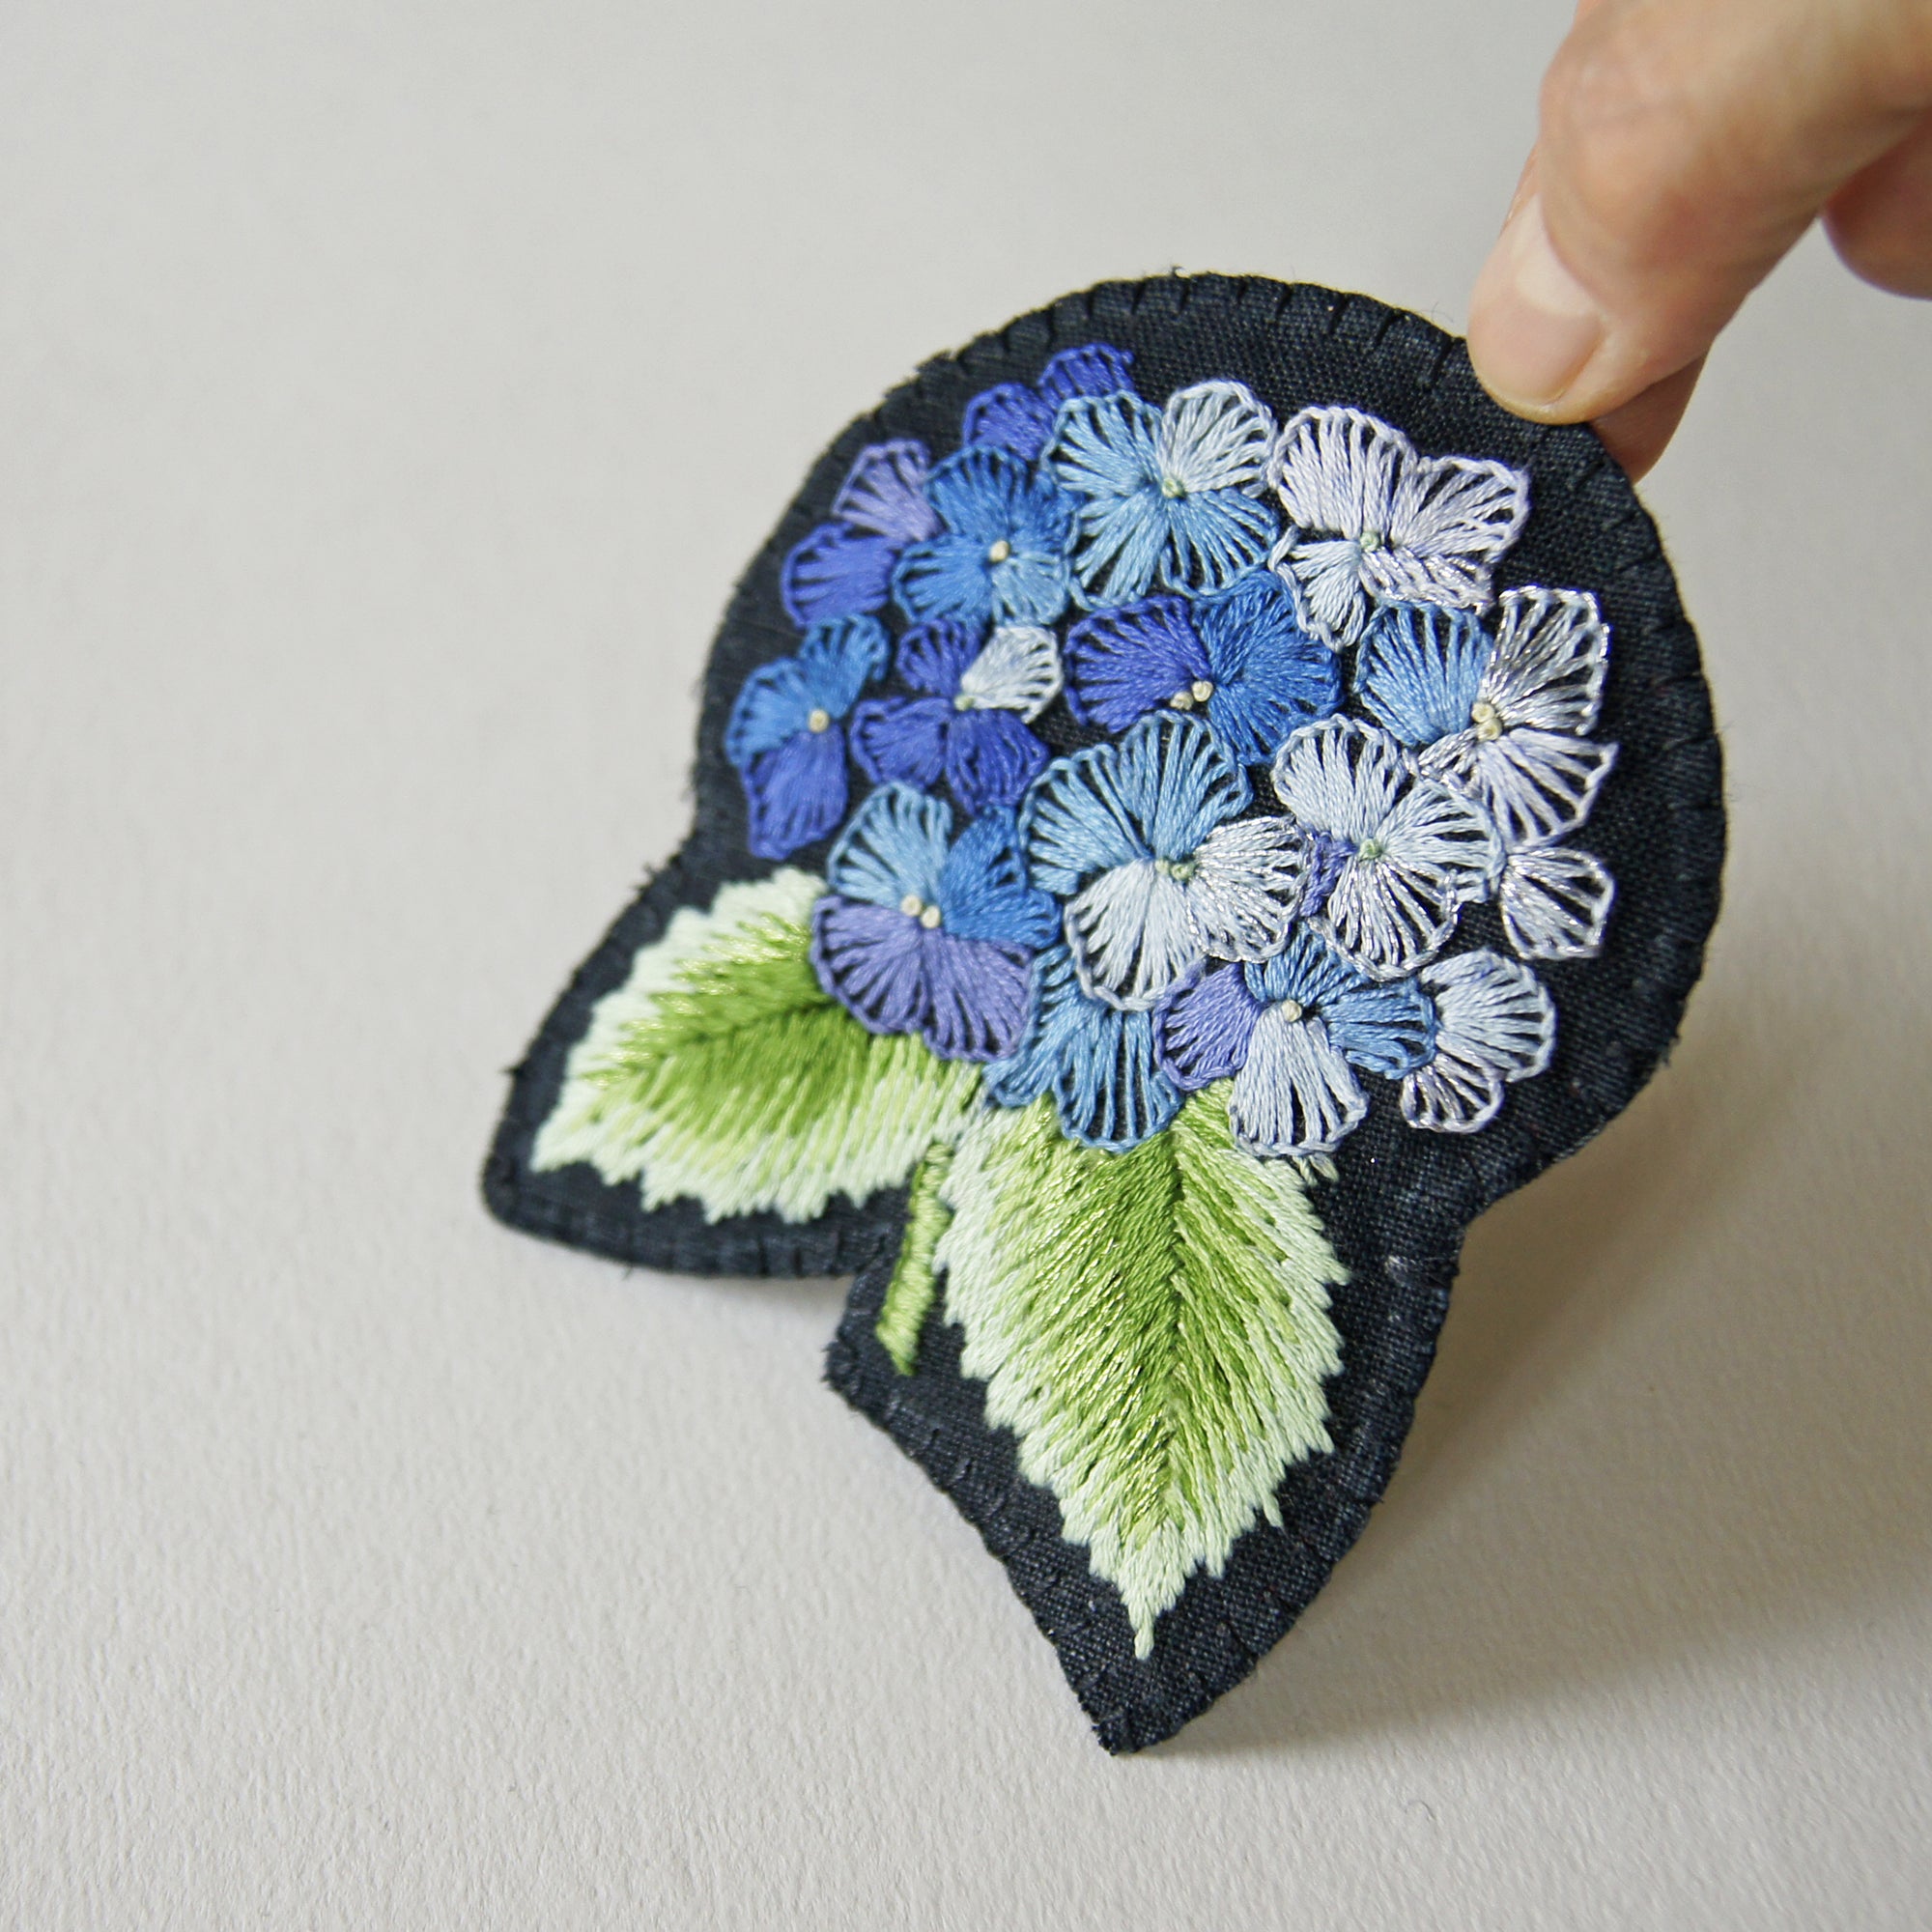 Tiny embroideries